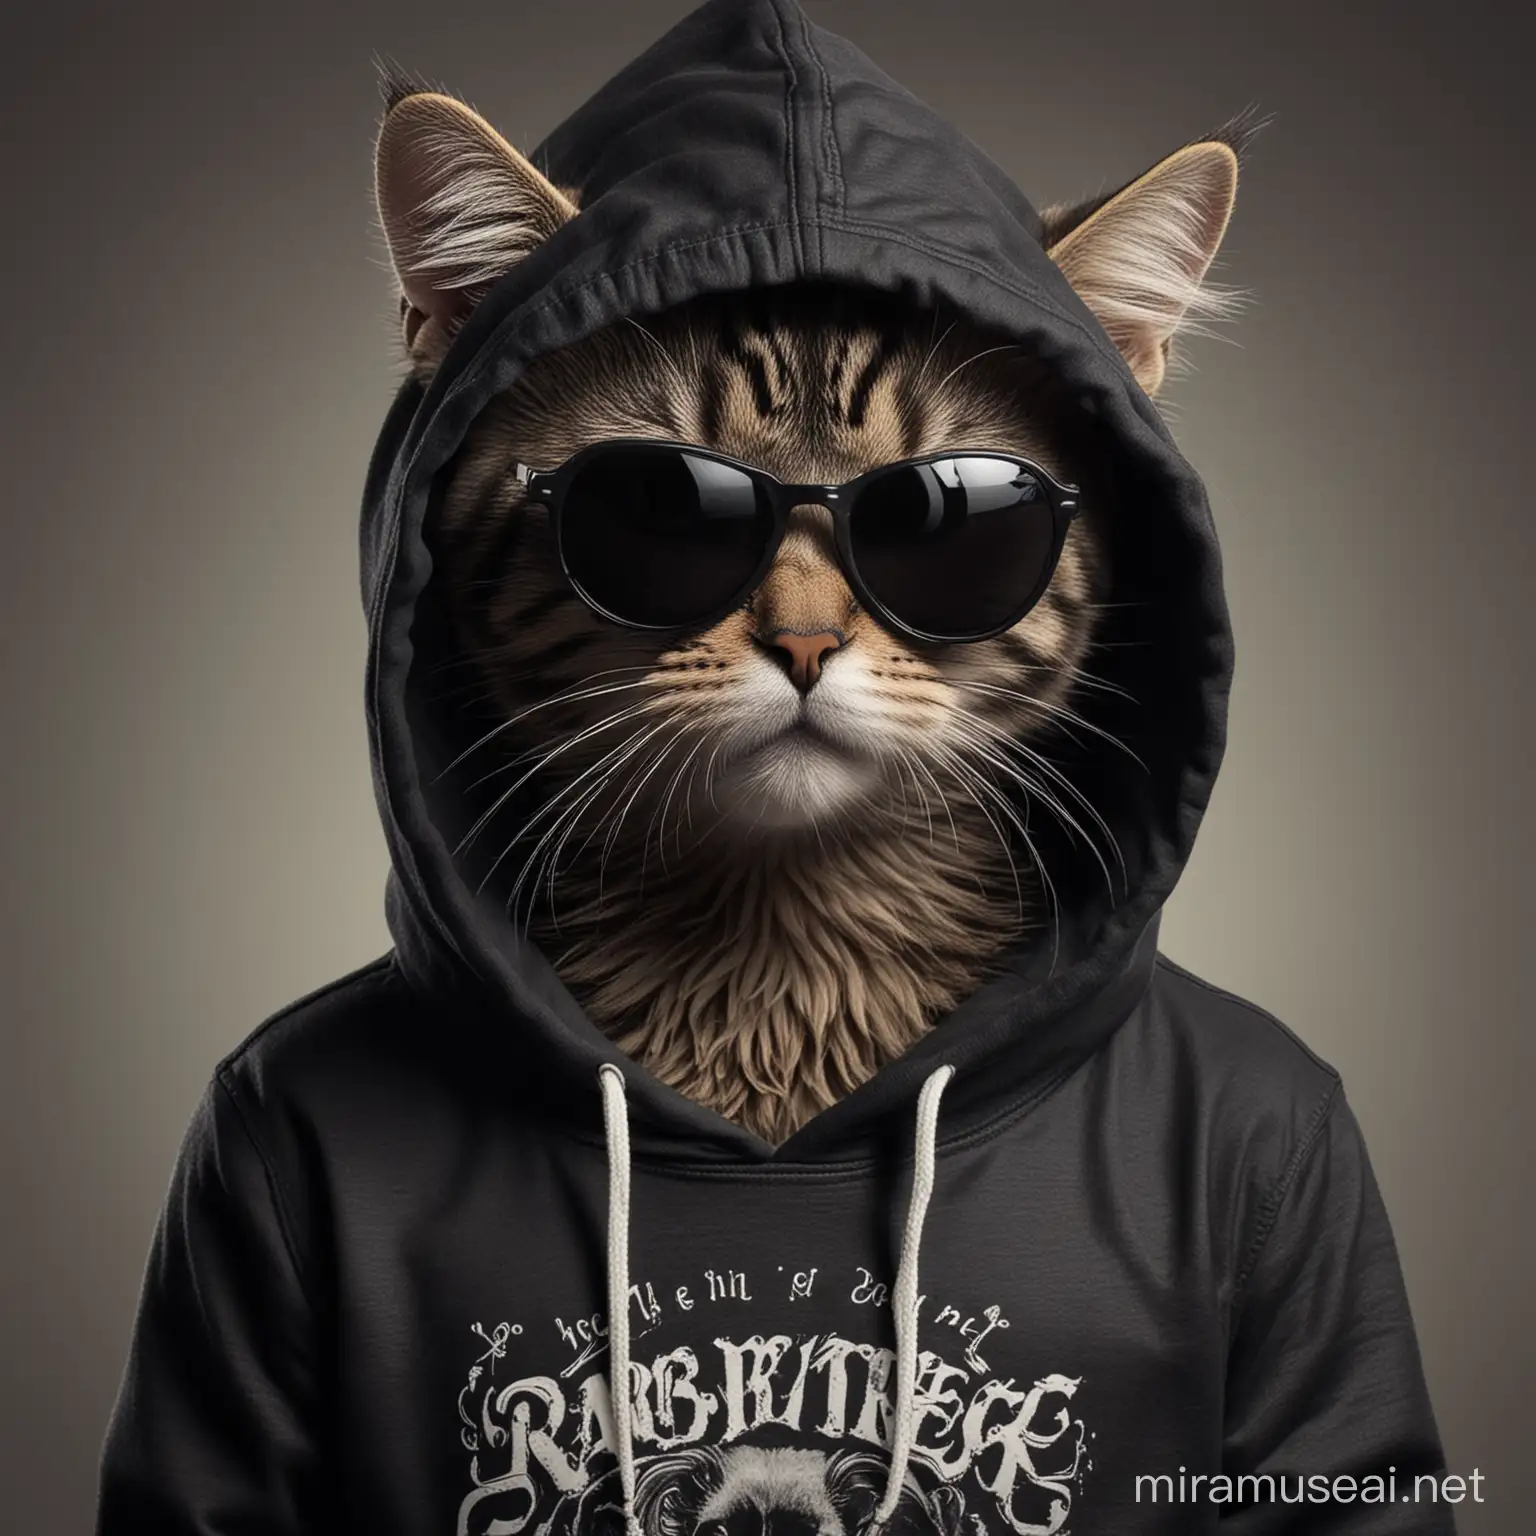 Cool Rocker Cat Wearing Sunglasses and Black Hoodie